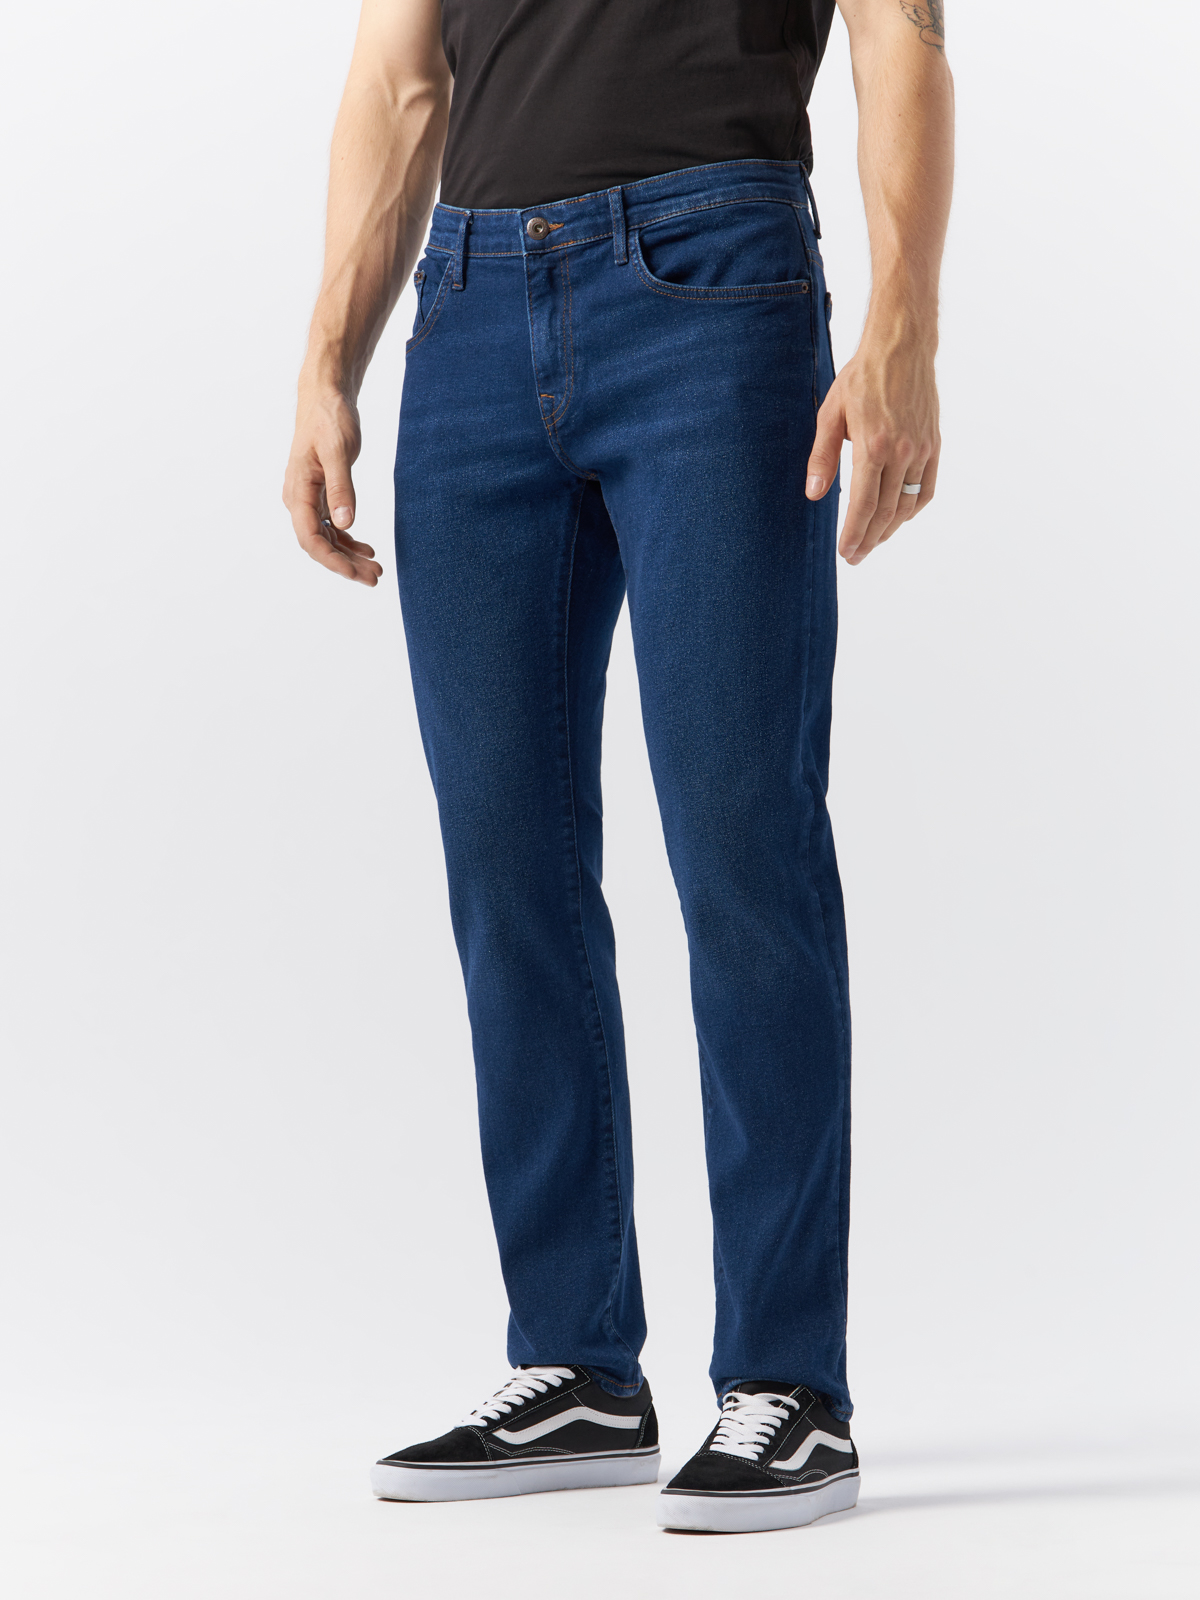 Джинсы Cross Jeans для мужчин, F 152-133, размер 33-32, синие